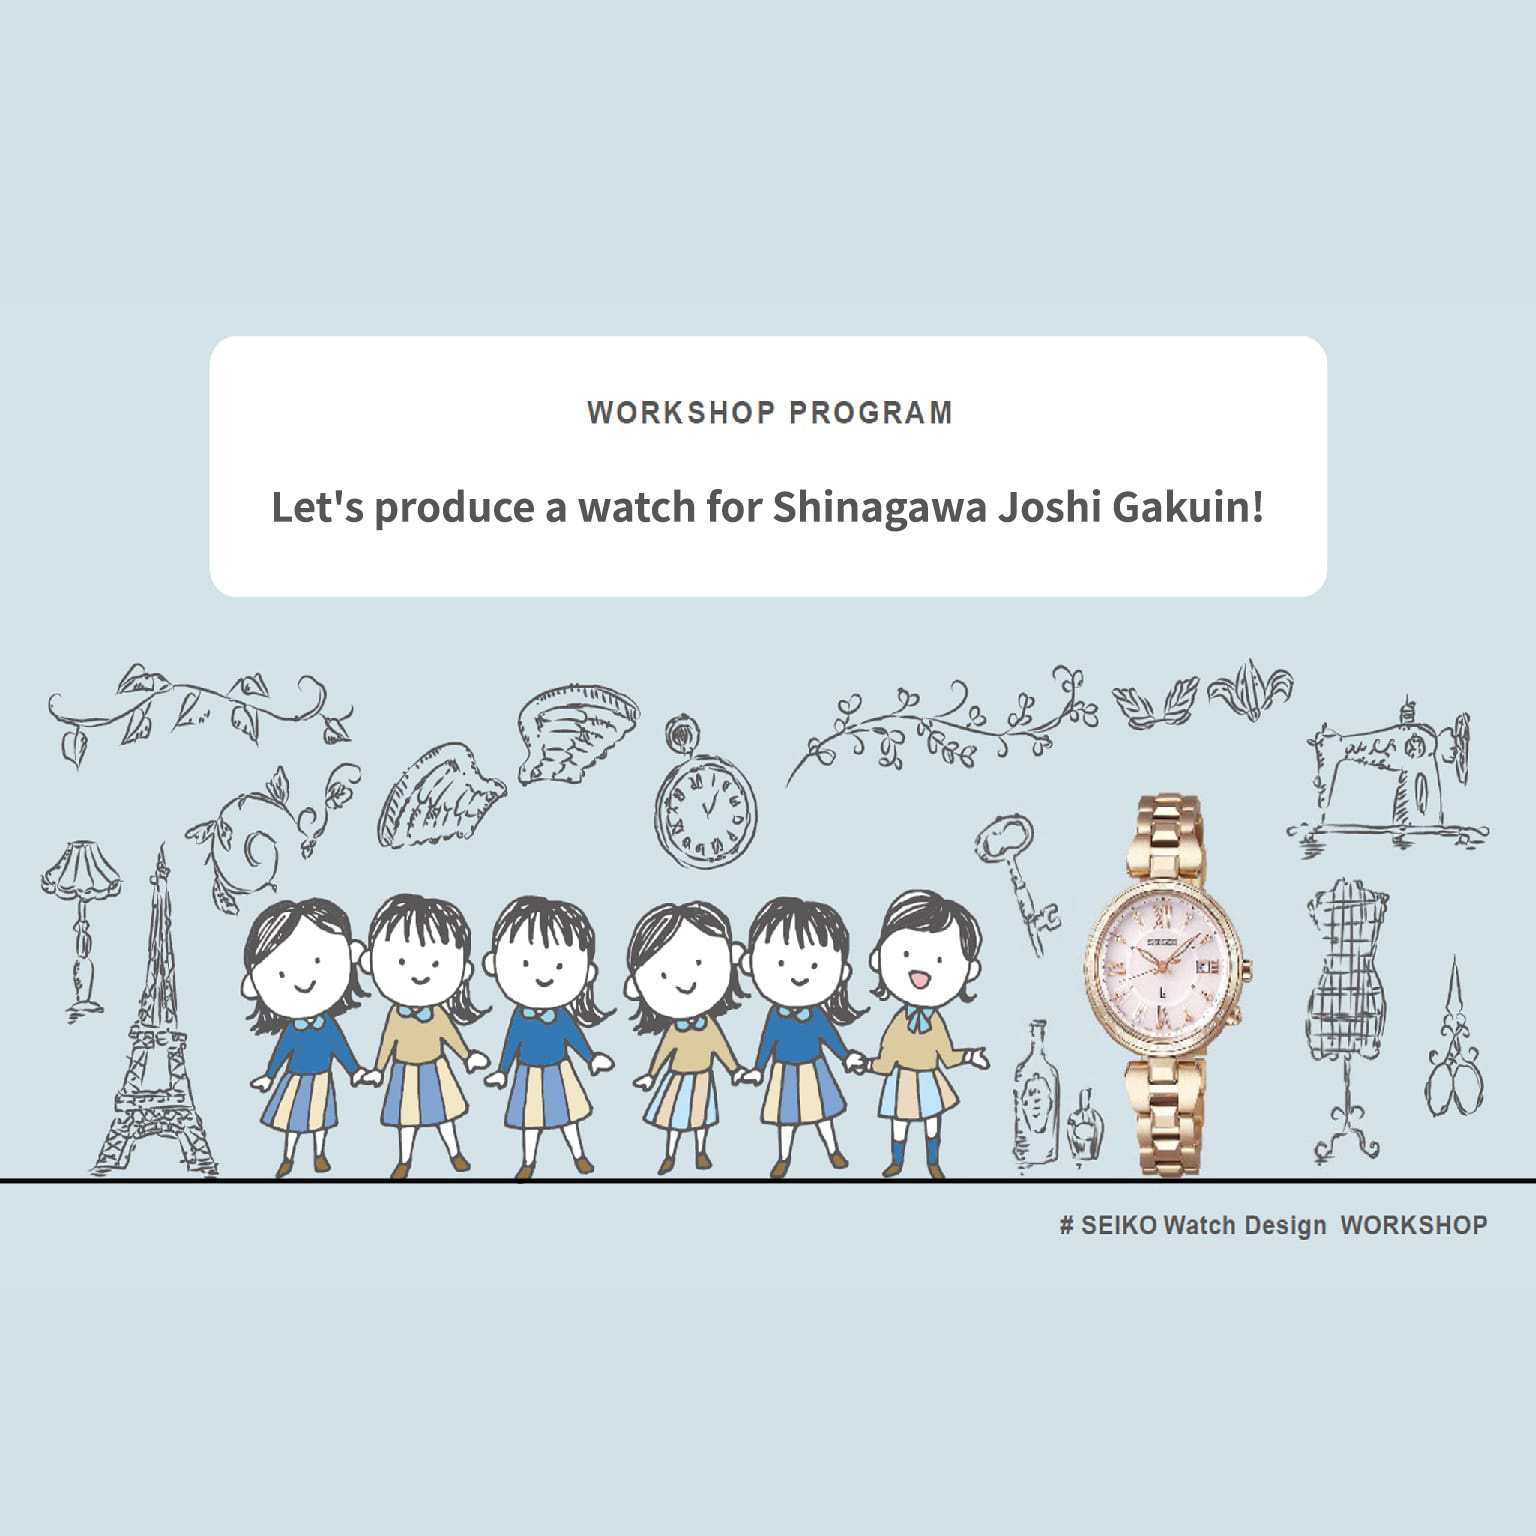 Let's produce a watch for Shinagawa Joshi Gakuin!